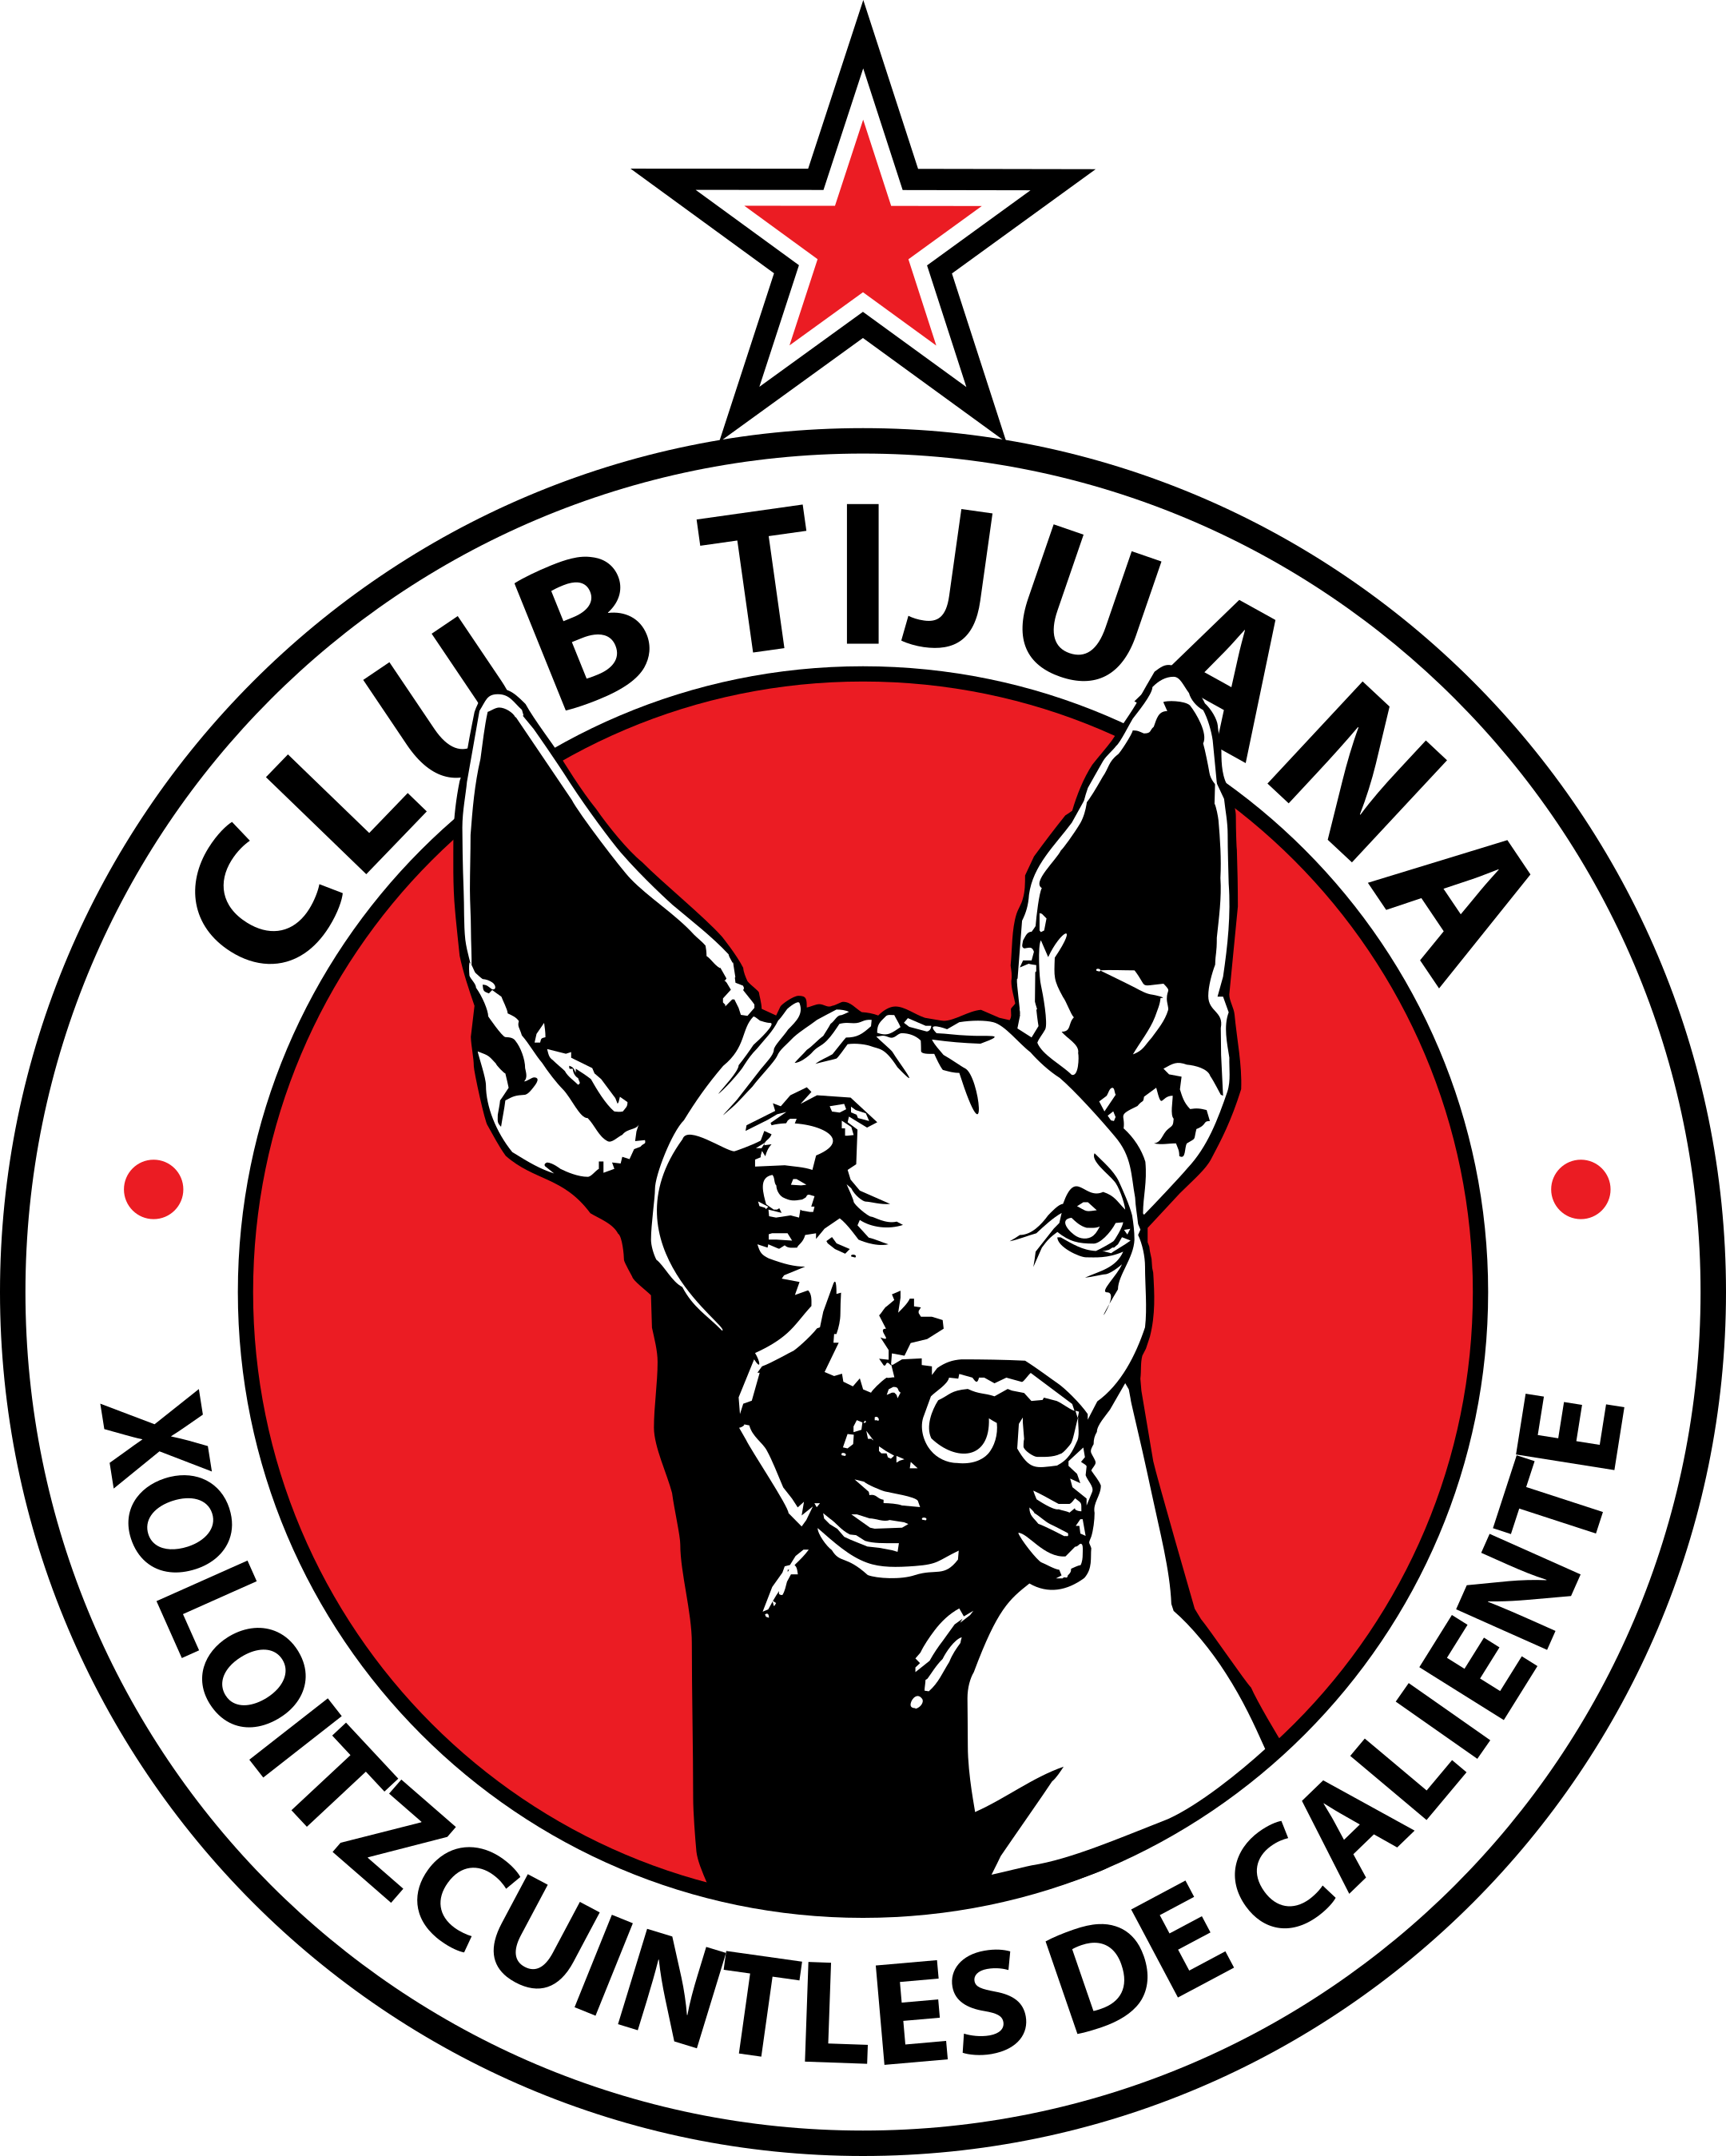 club tijuana logo 1 - Club Tijuana Logo